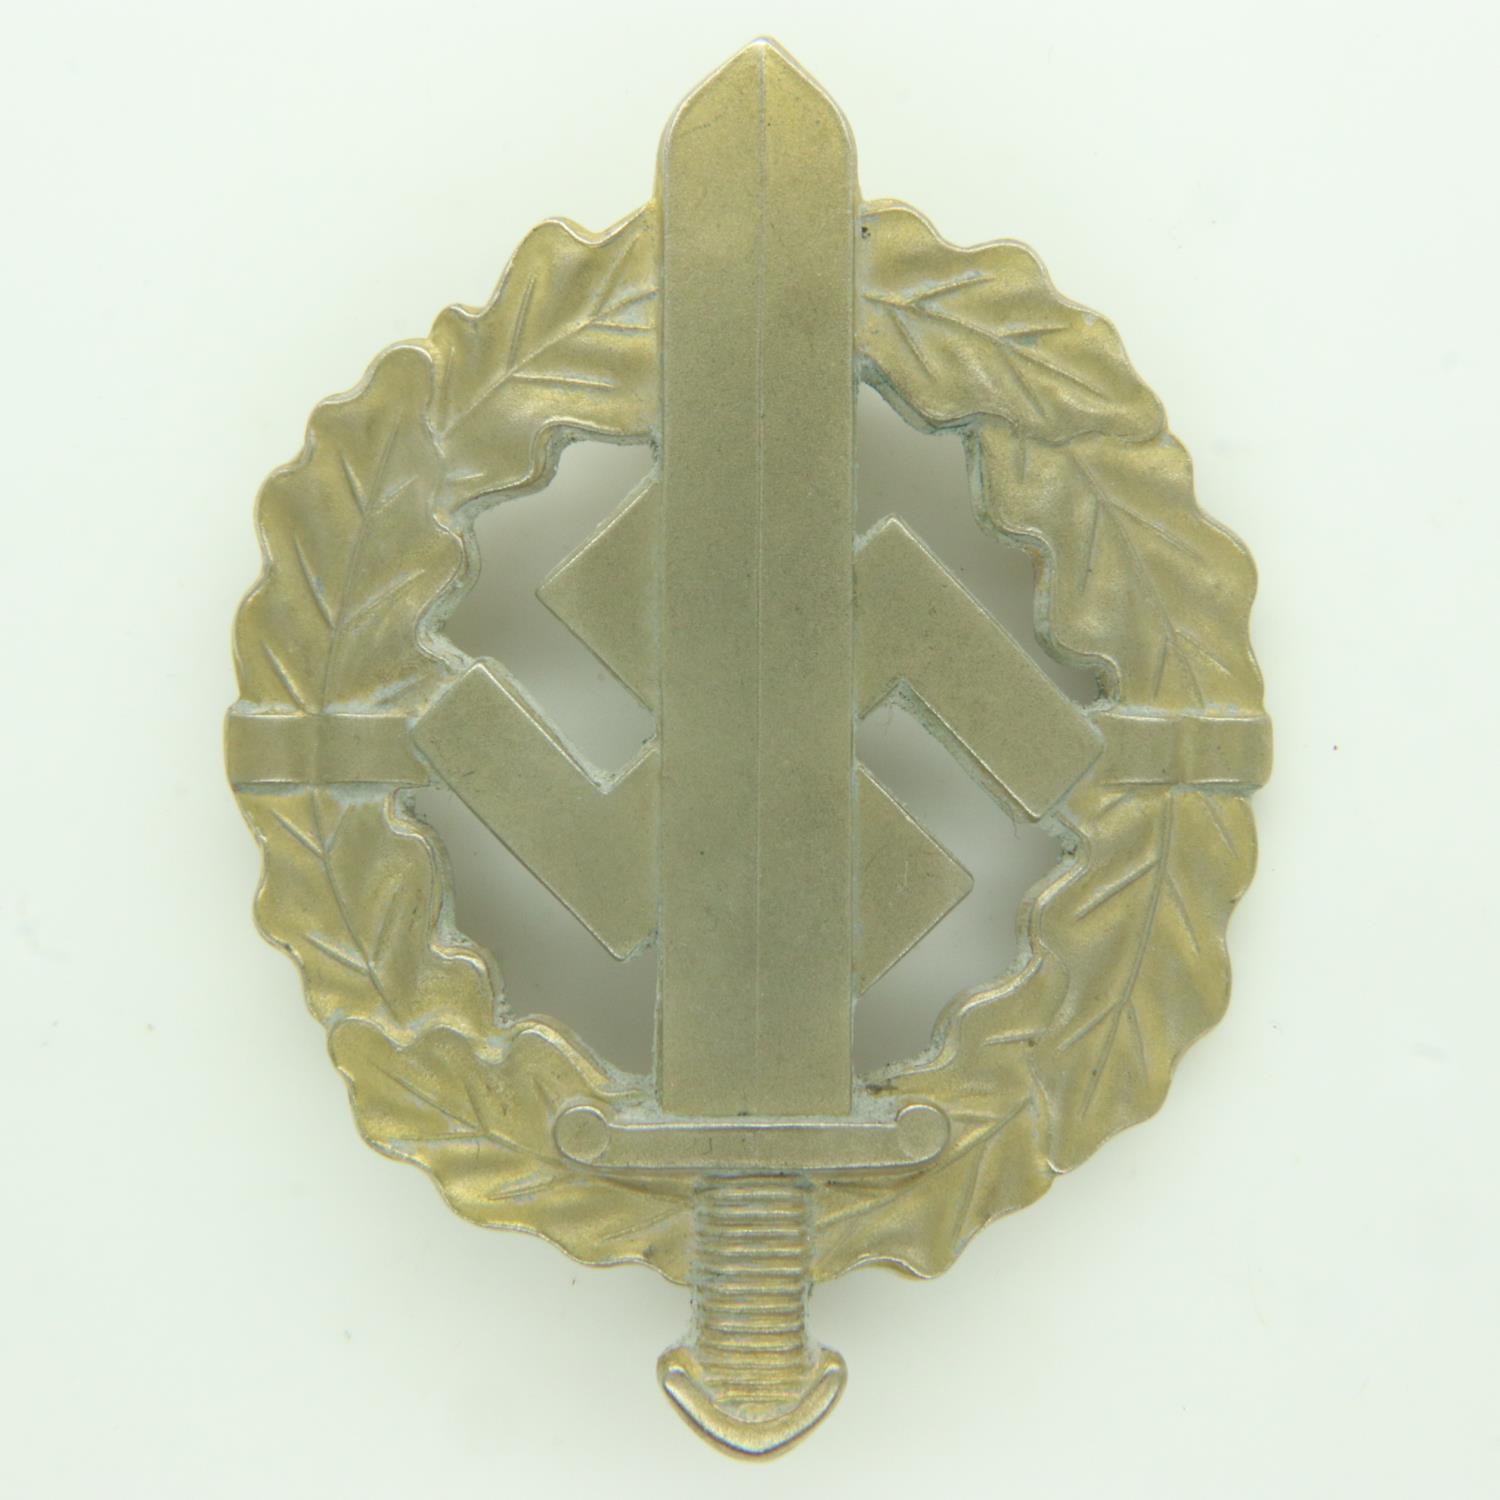 Third Reich Gold Grade S.A Sports Badge, maker: Berg & Nolte. UK P&P Group 0 (£6+VAT for the first